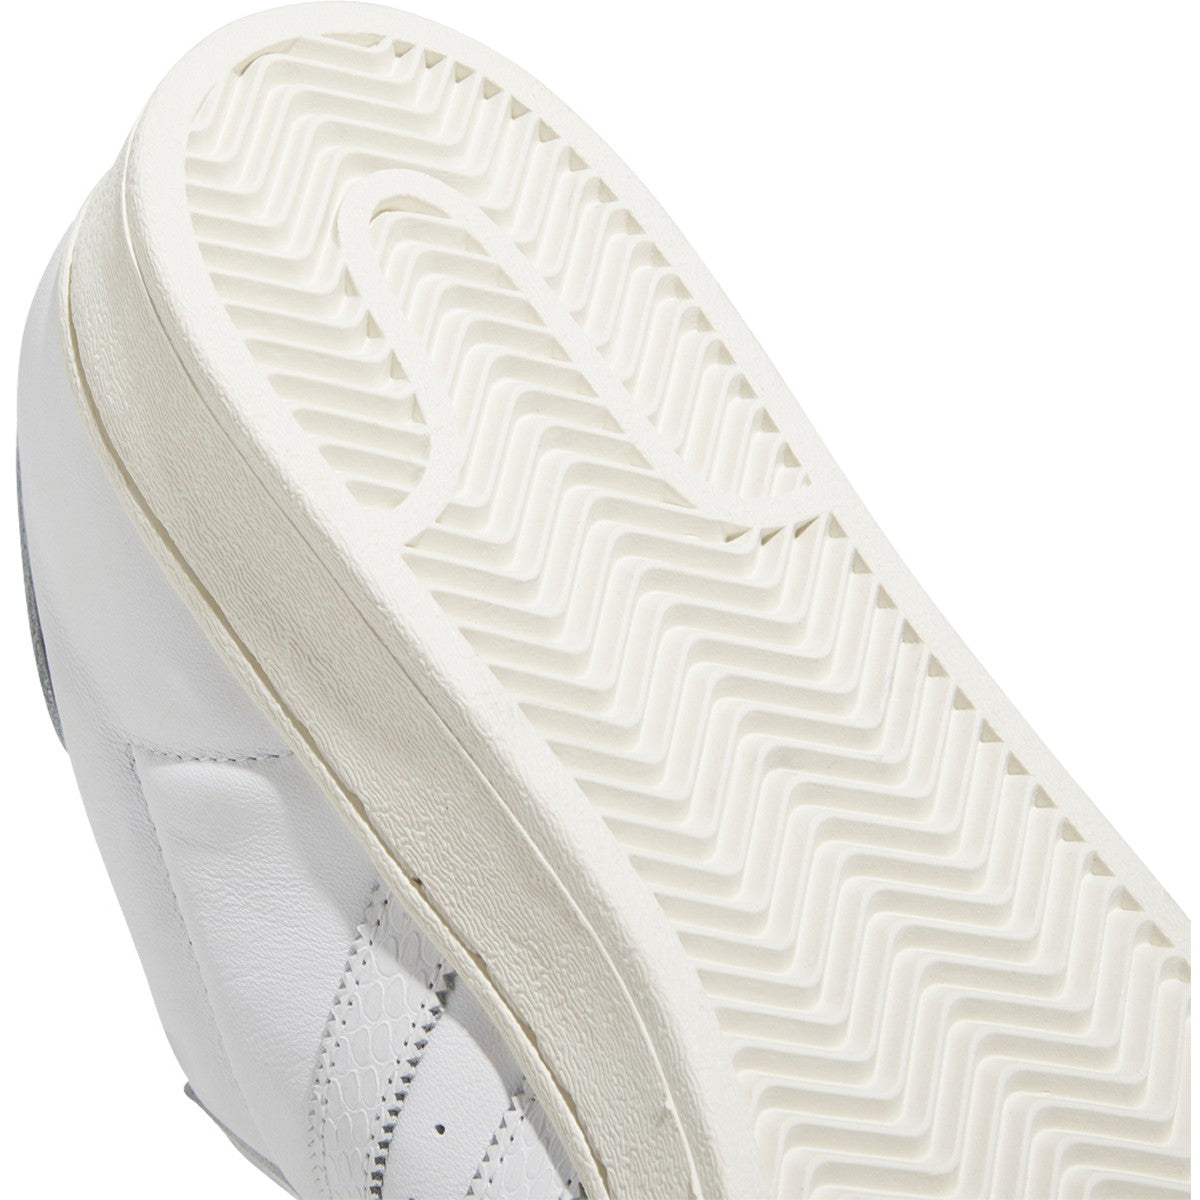 White/White Superstar ADV Adidas Skate Shoe Bottom